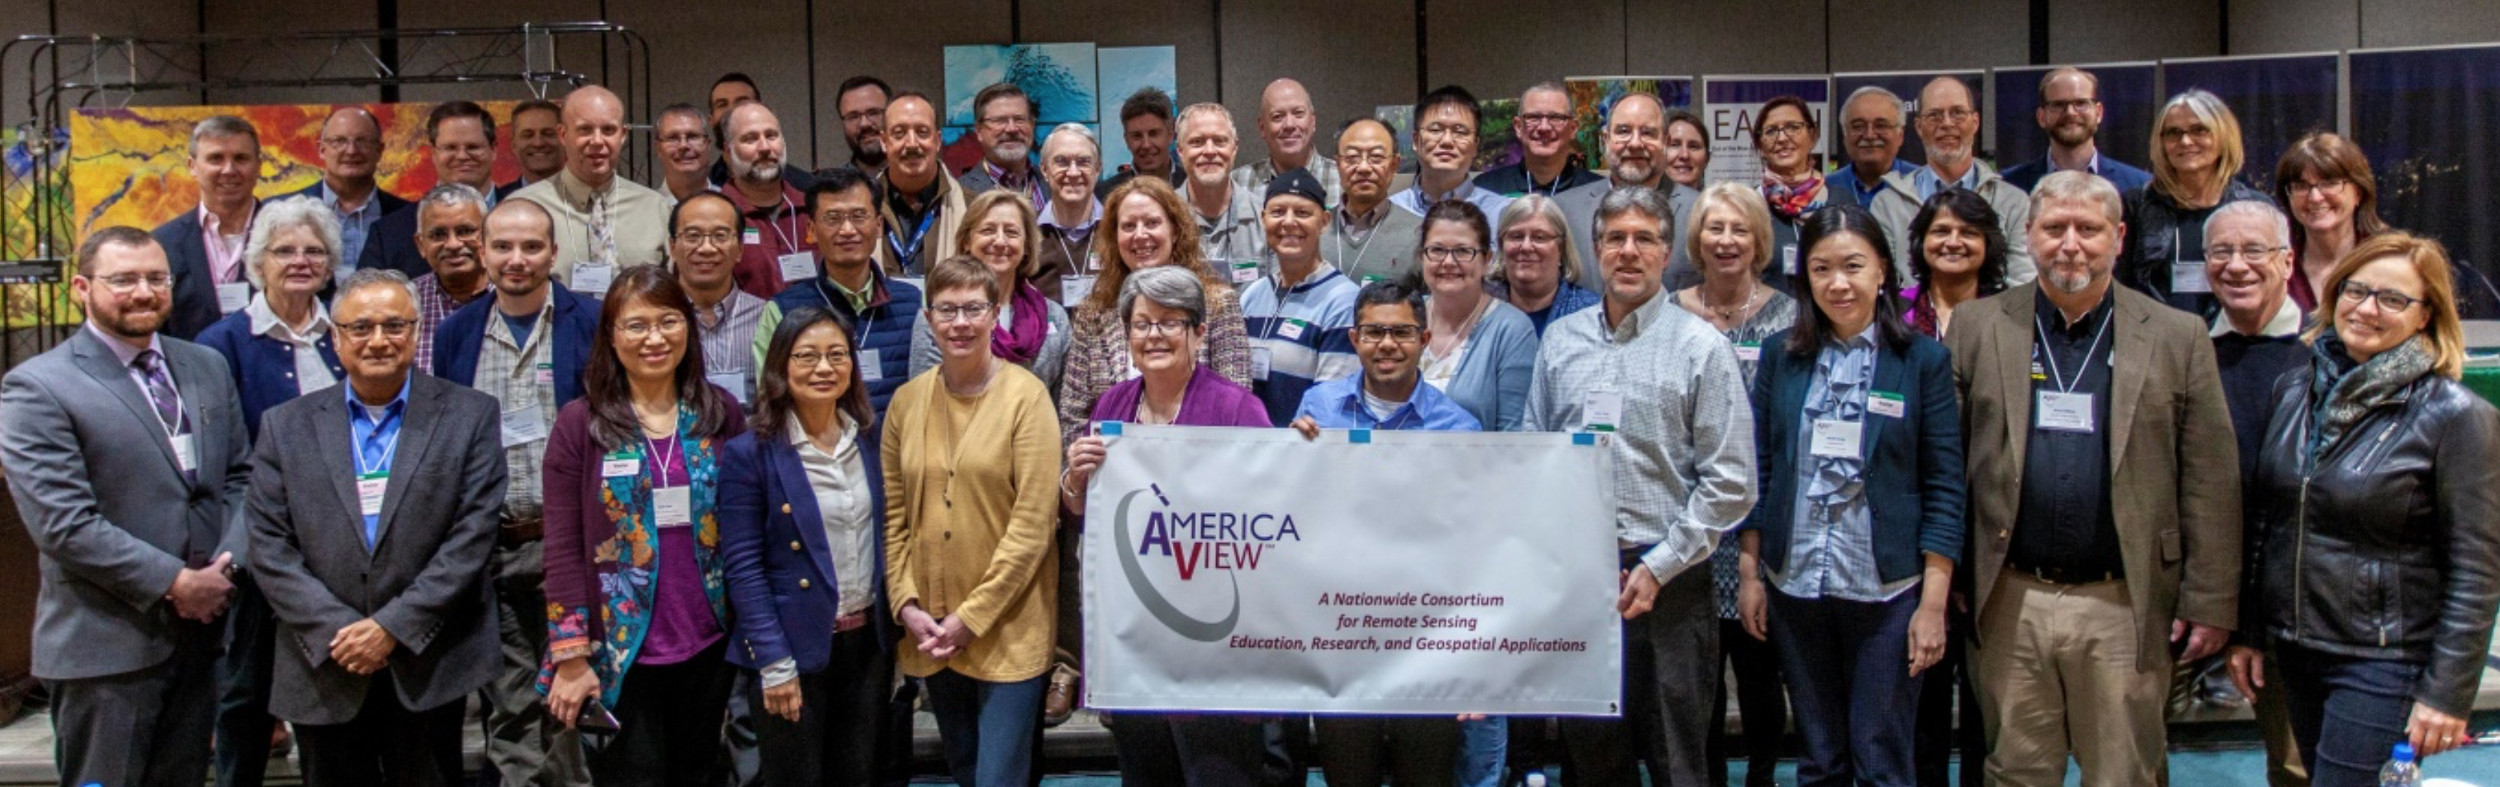 AmericaView Principal Investigators Annual Meeting, Fall 2019, Reston, Virginia, USA.